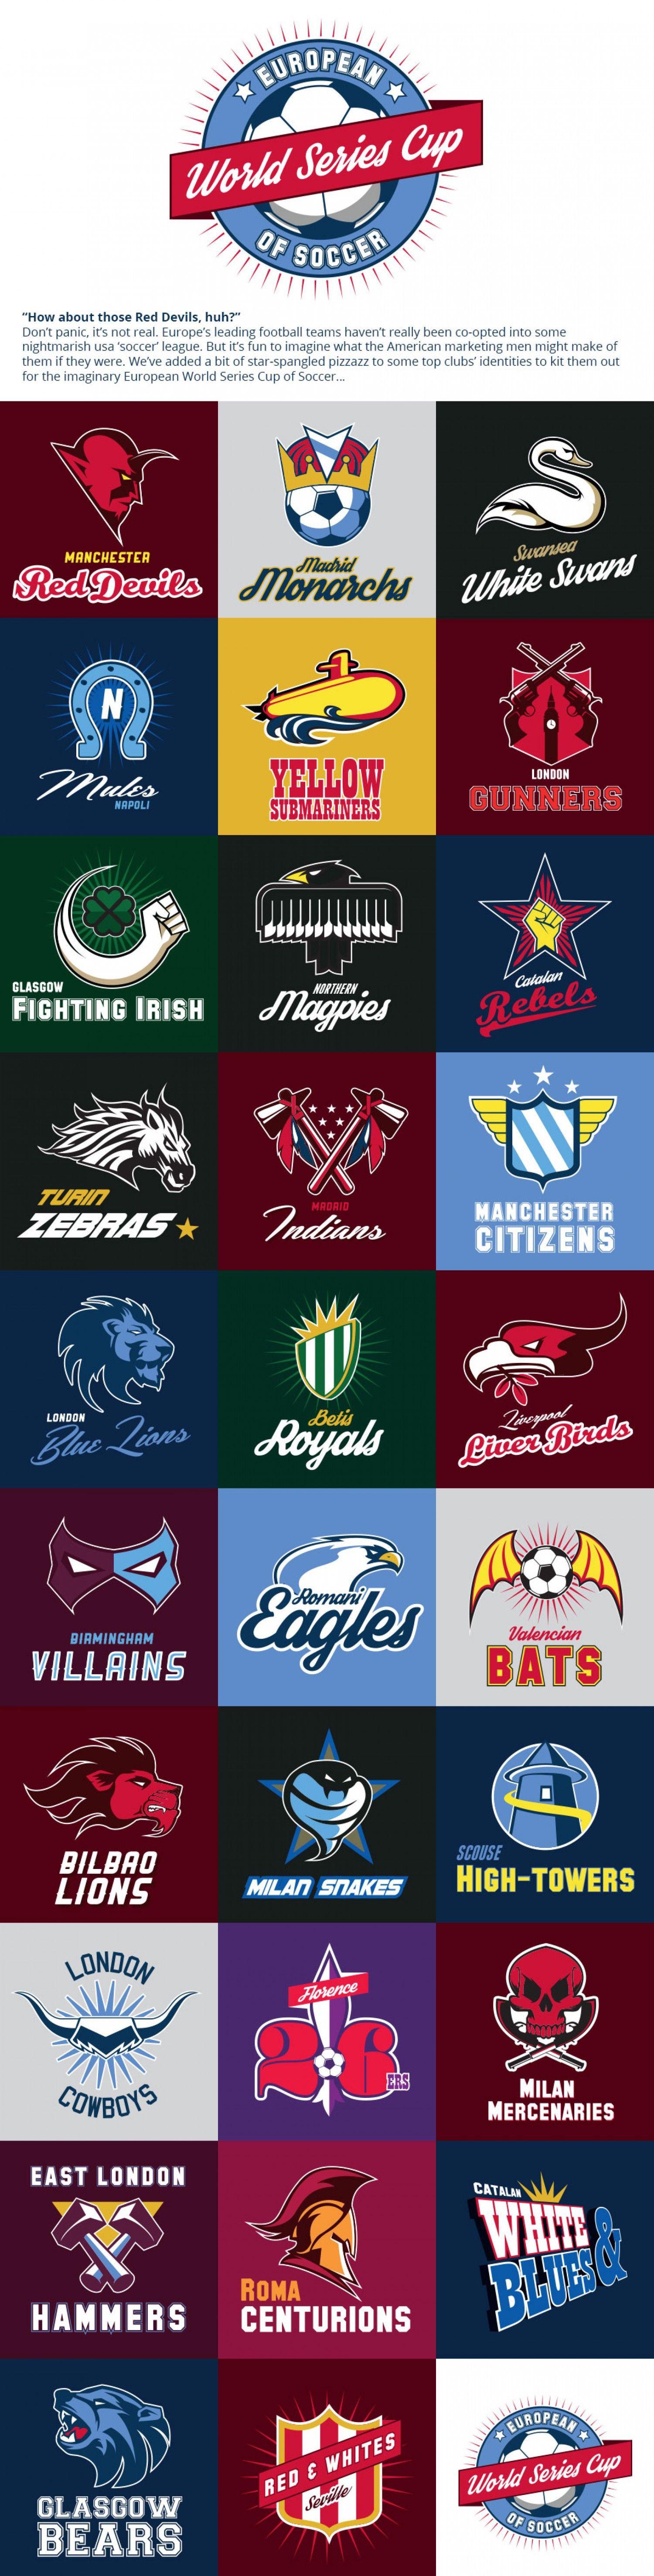 European Sports Logo - Europe's Top Football Teams' Logos Got Re Designed Like American